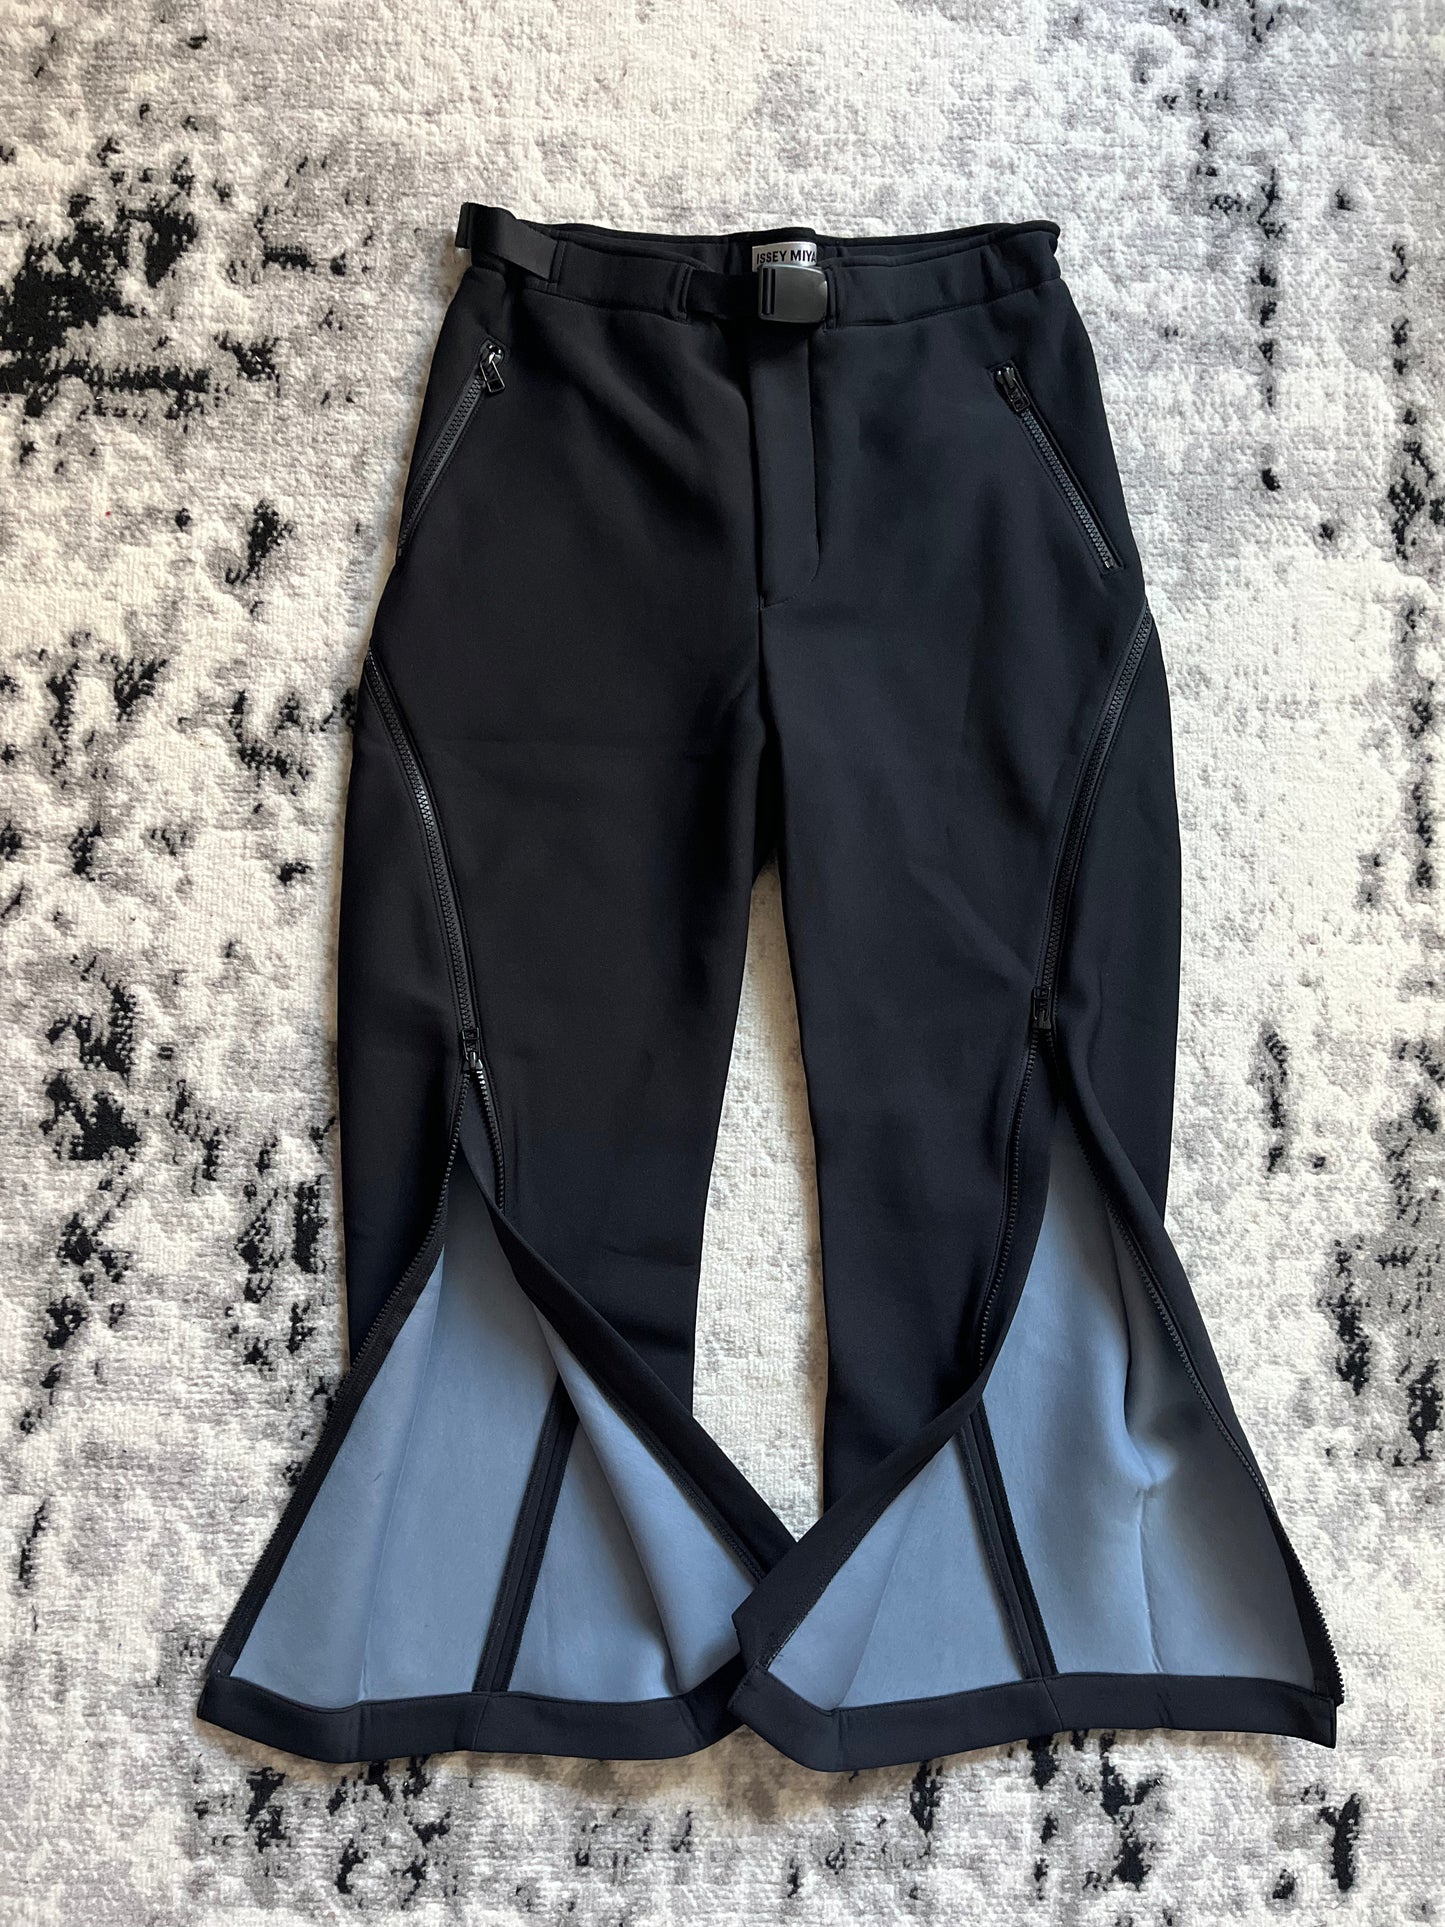 AW21 Issey Miyake Full Zip Technical Pants (XS/S)